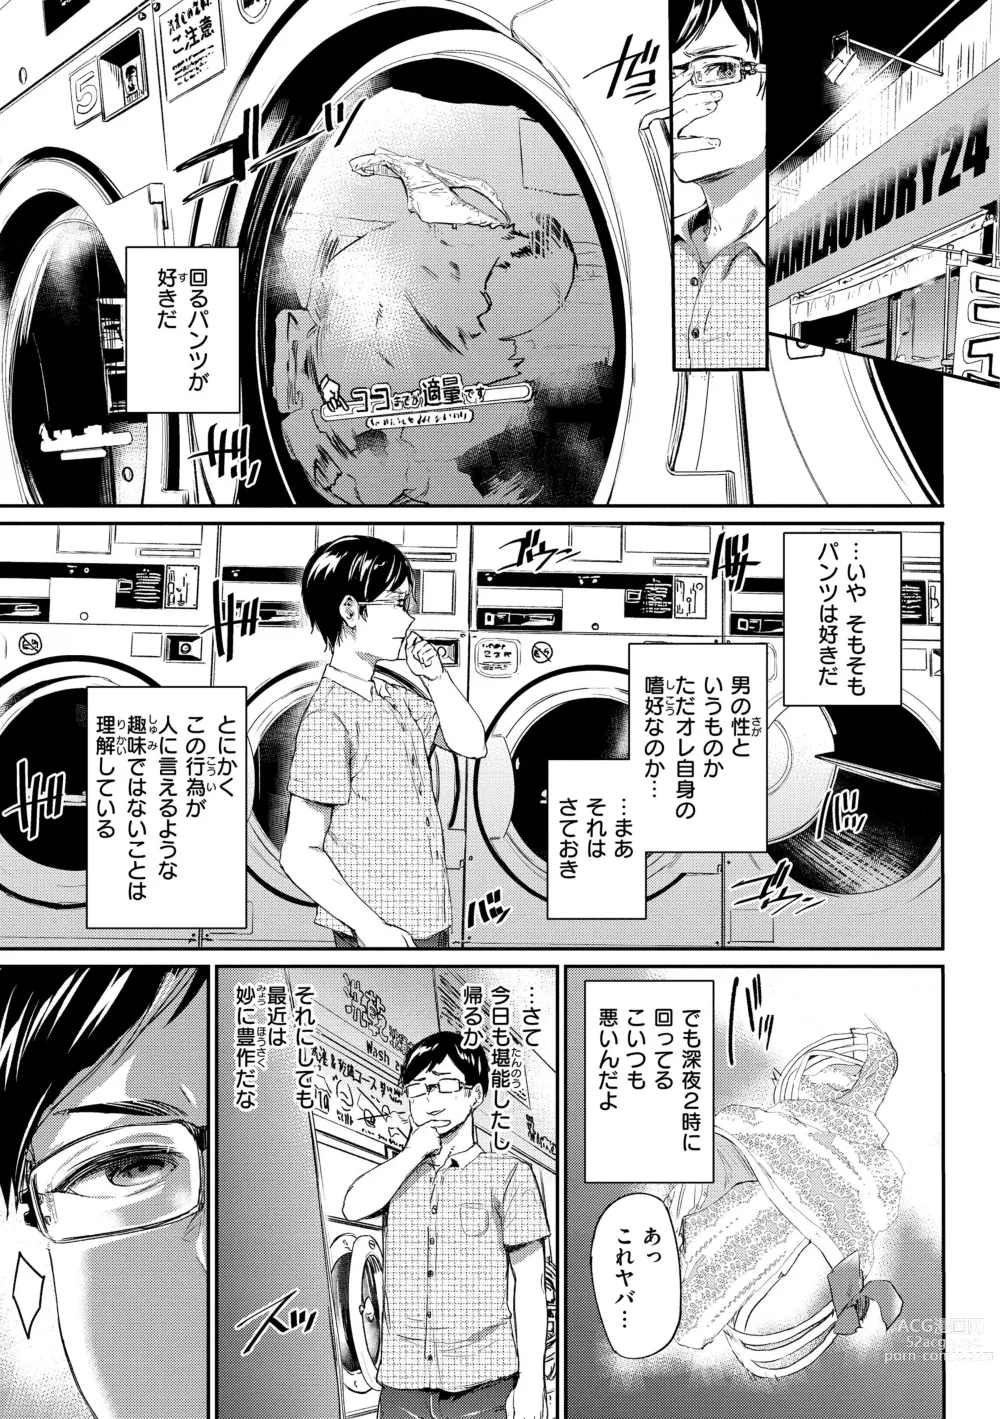 Page 5 of manga Immoral Mine